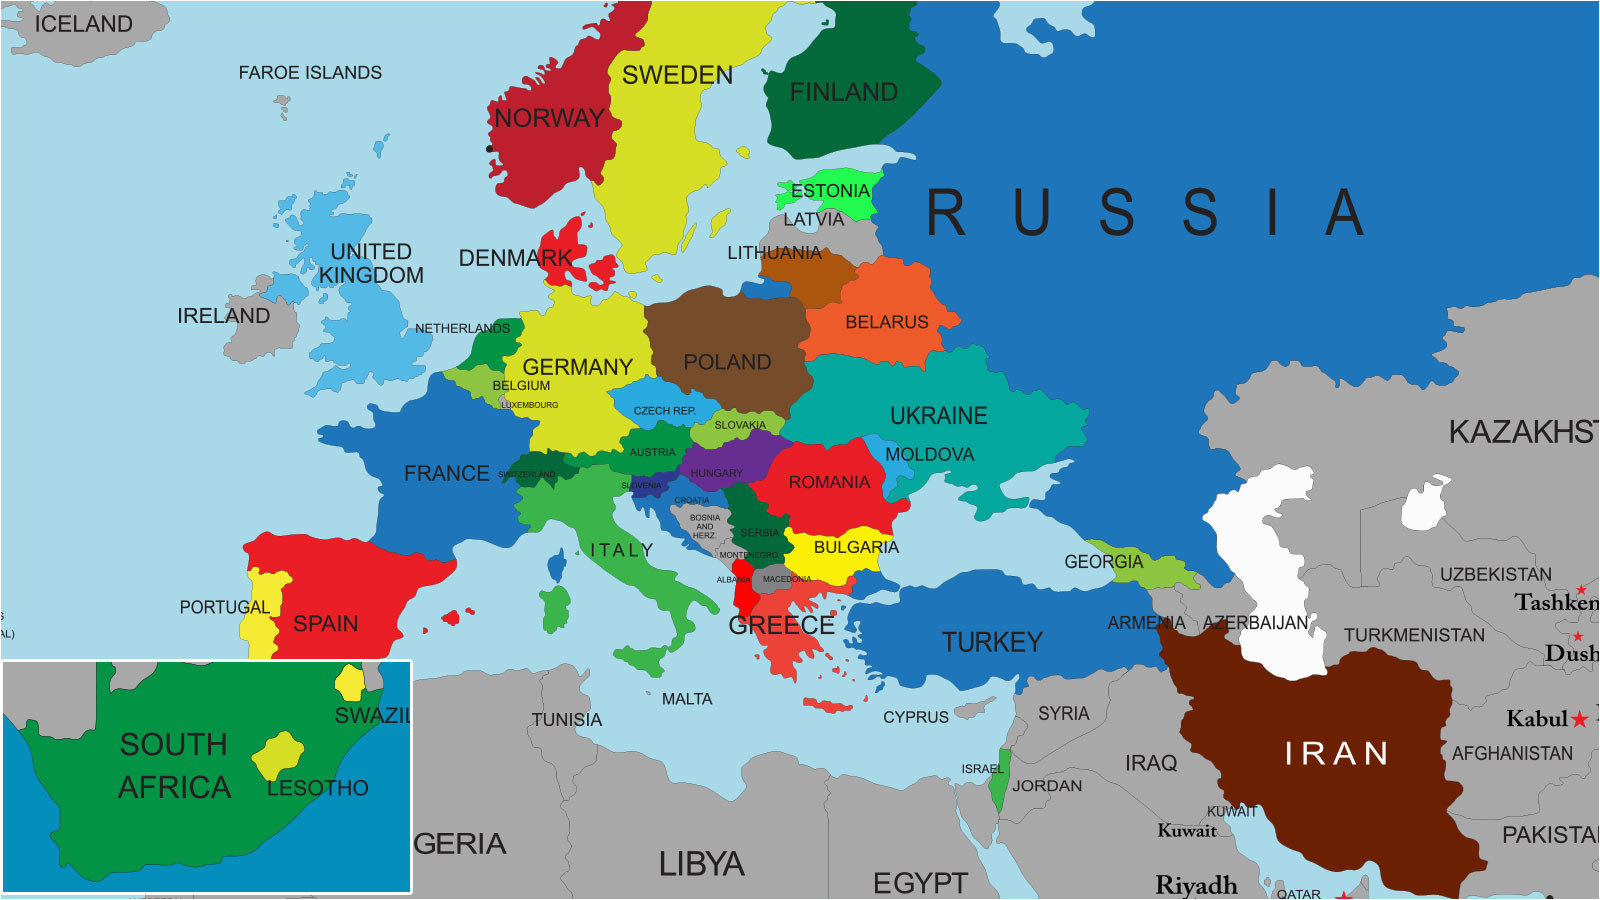 28 thorough europe map w countries